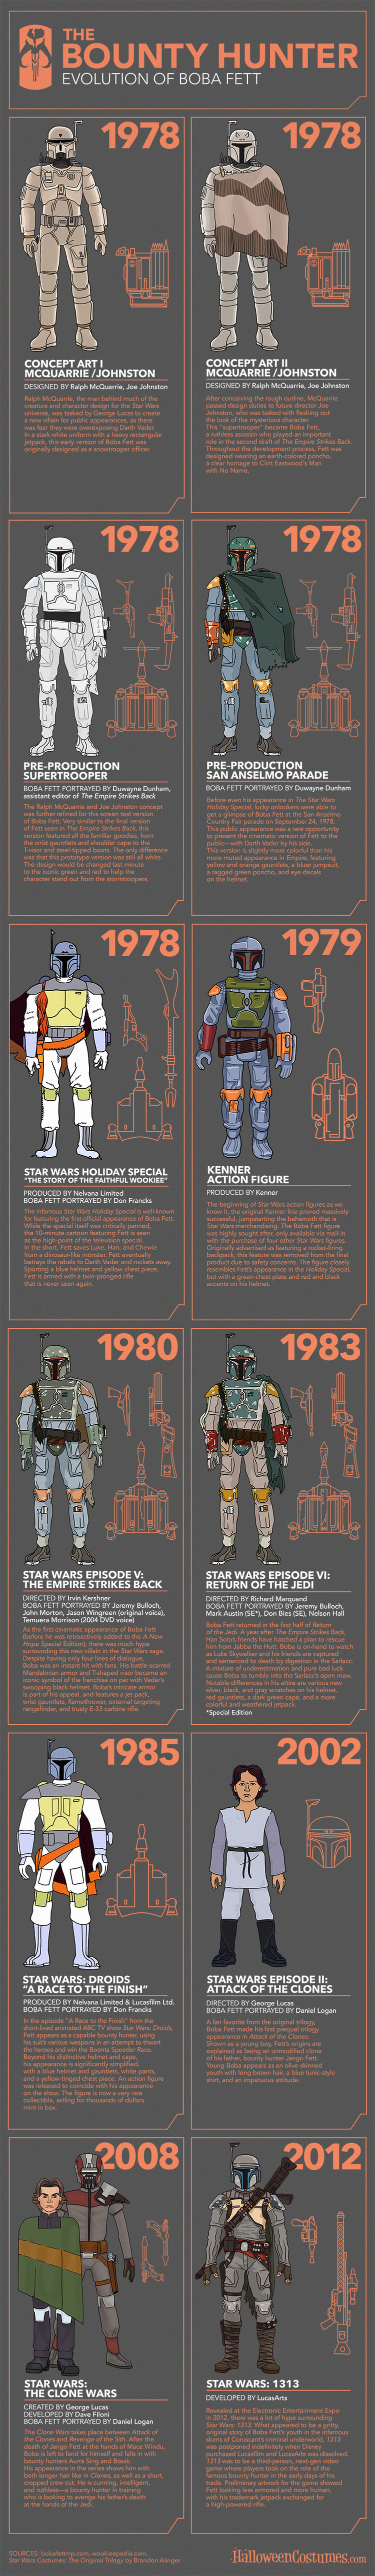 star-wars-infographic-shows-the-evolution-of-boba-fett